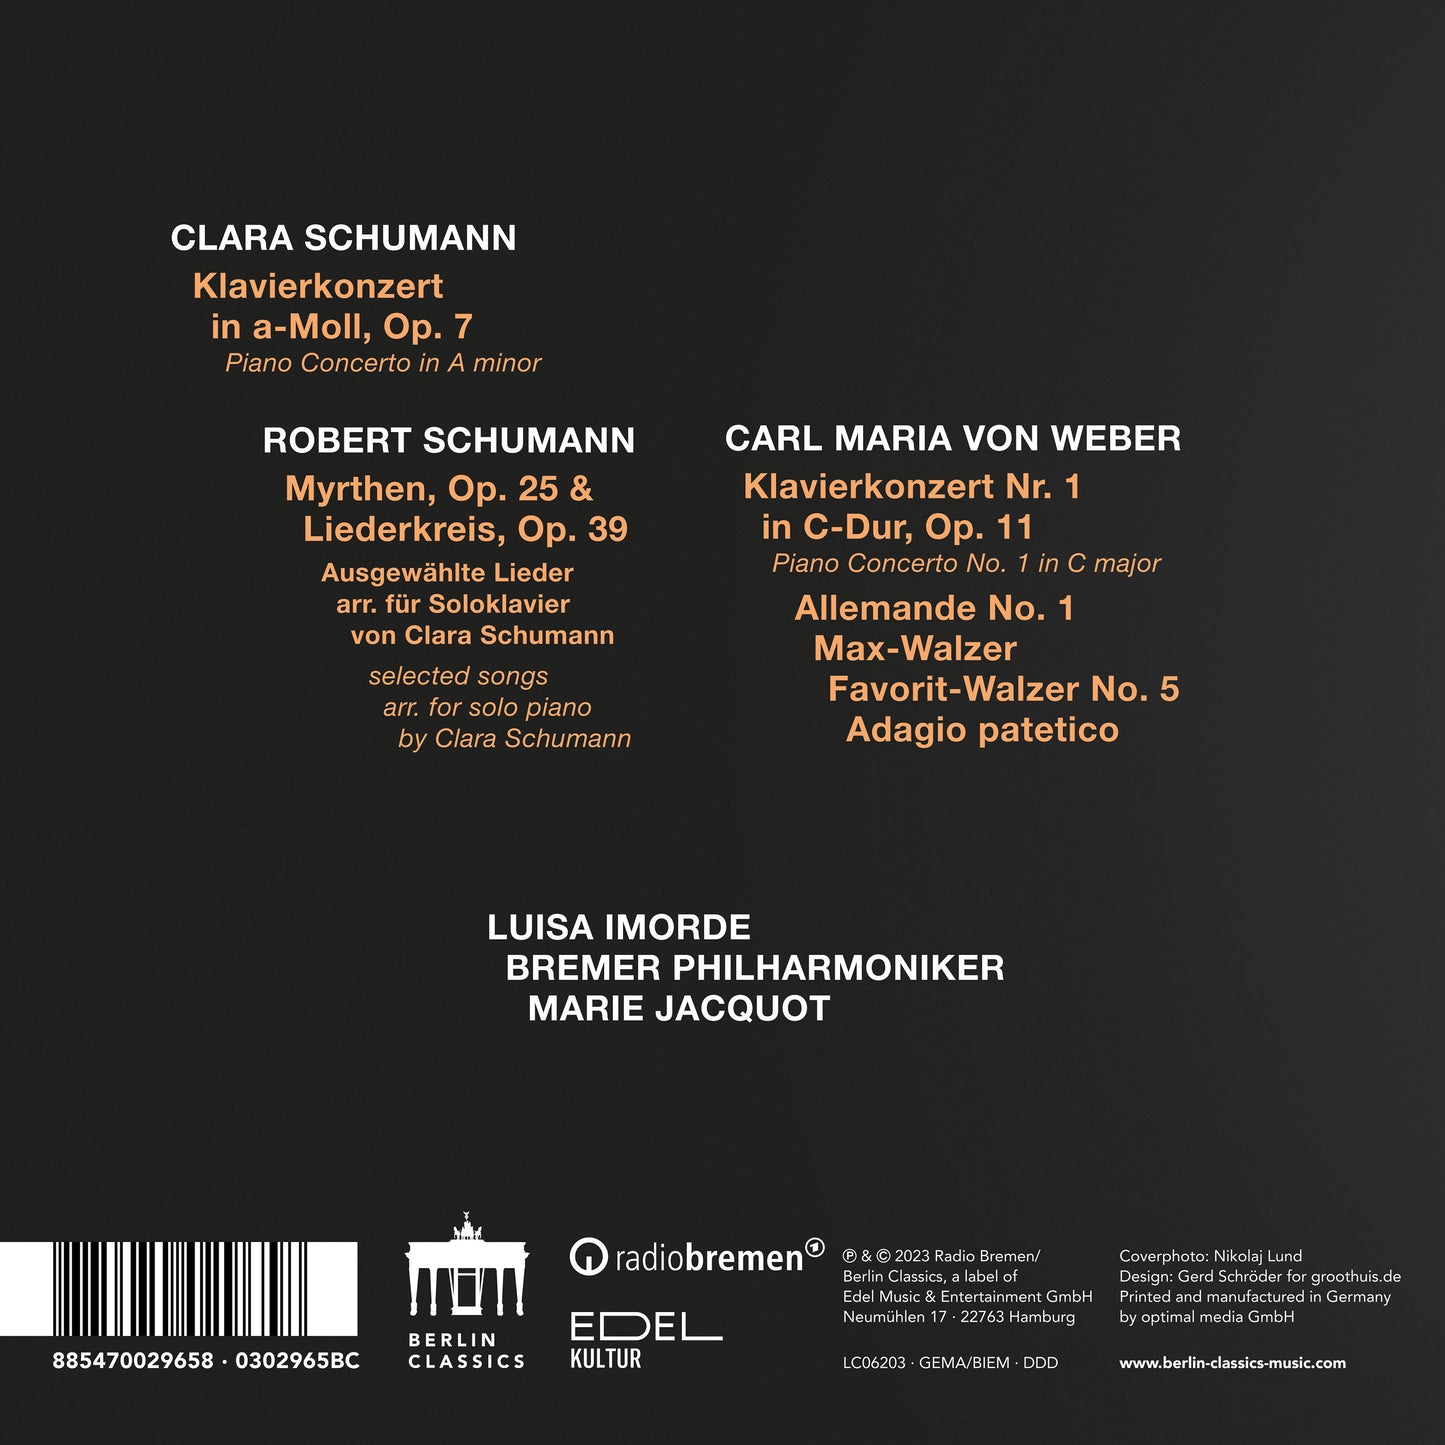 C. Schumann, R. Schumann & Weber: Piano Concertos